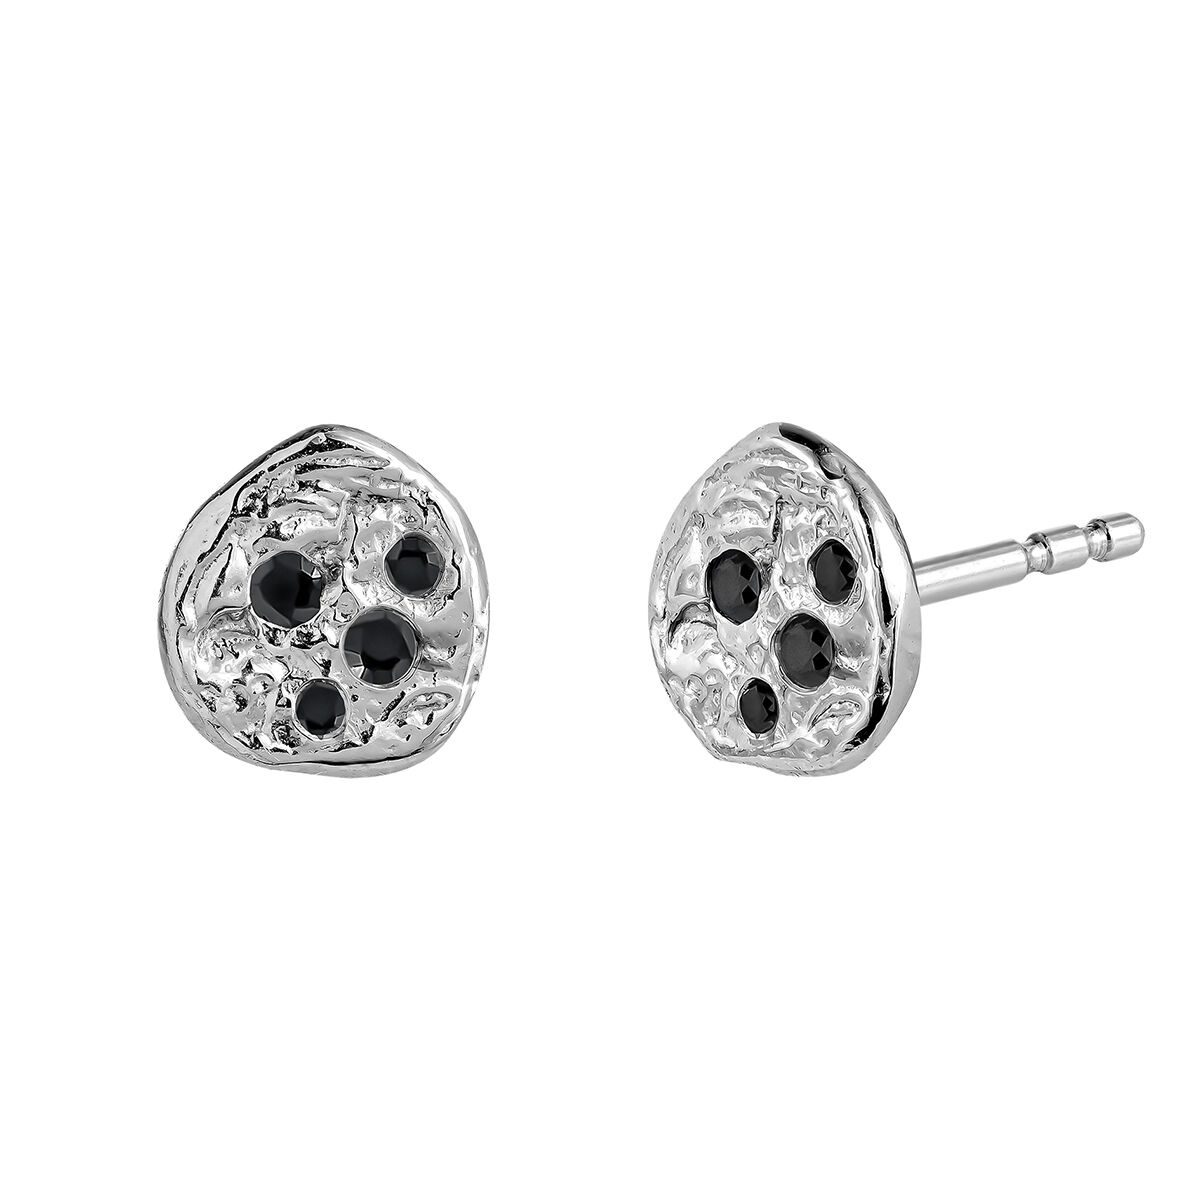 Silver stud earrings with raised detail and black spinel gemstones, J05077-01-BSN, hi-res